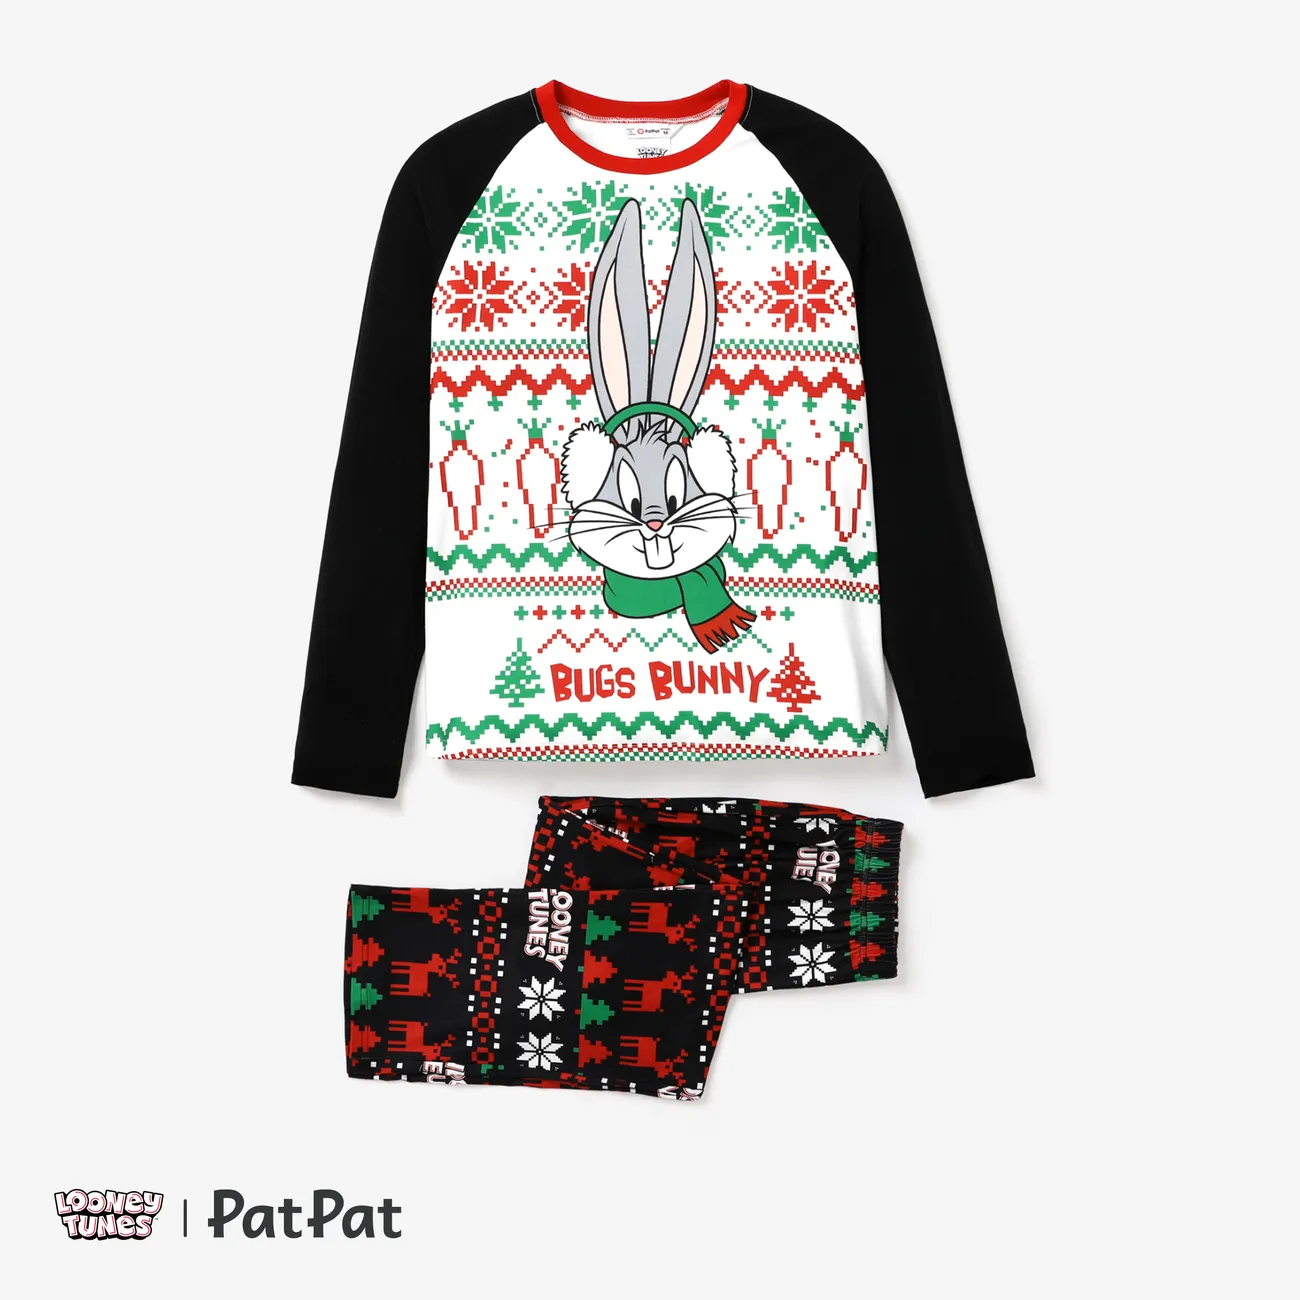 Looney Tunes Weihnachten Familien-Looks Langärmelig Familien-Outfits Pyjamas (Flame Resistant) rot schwarz big image 1